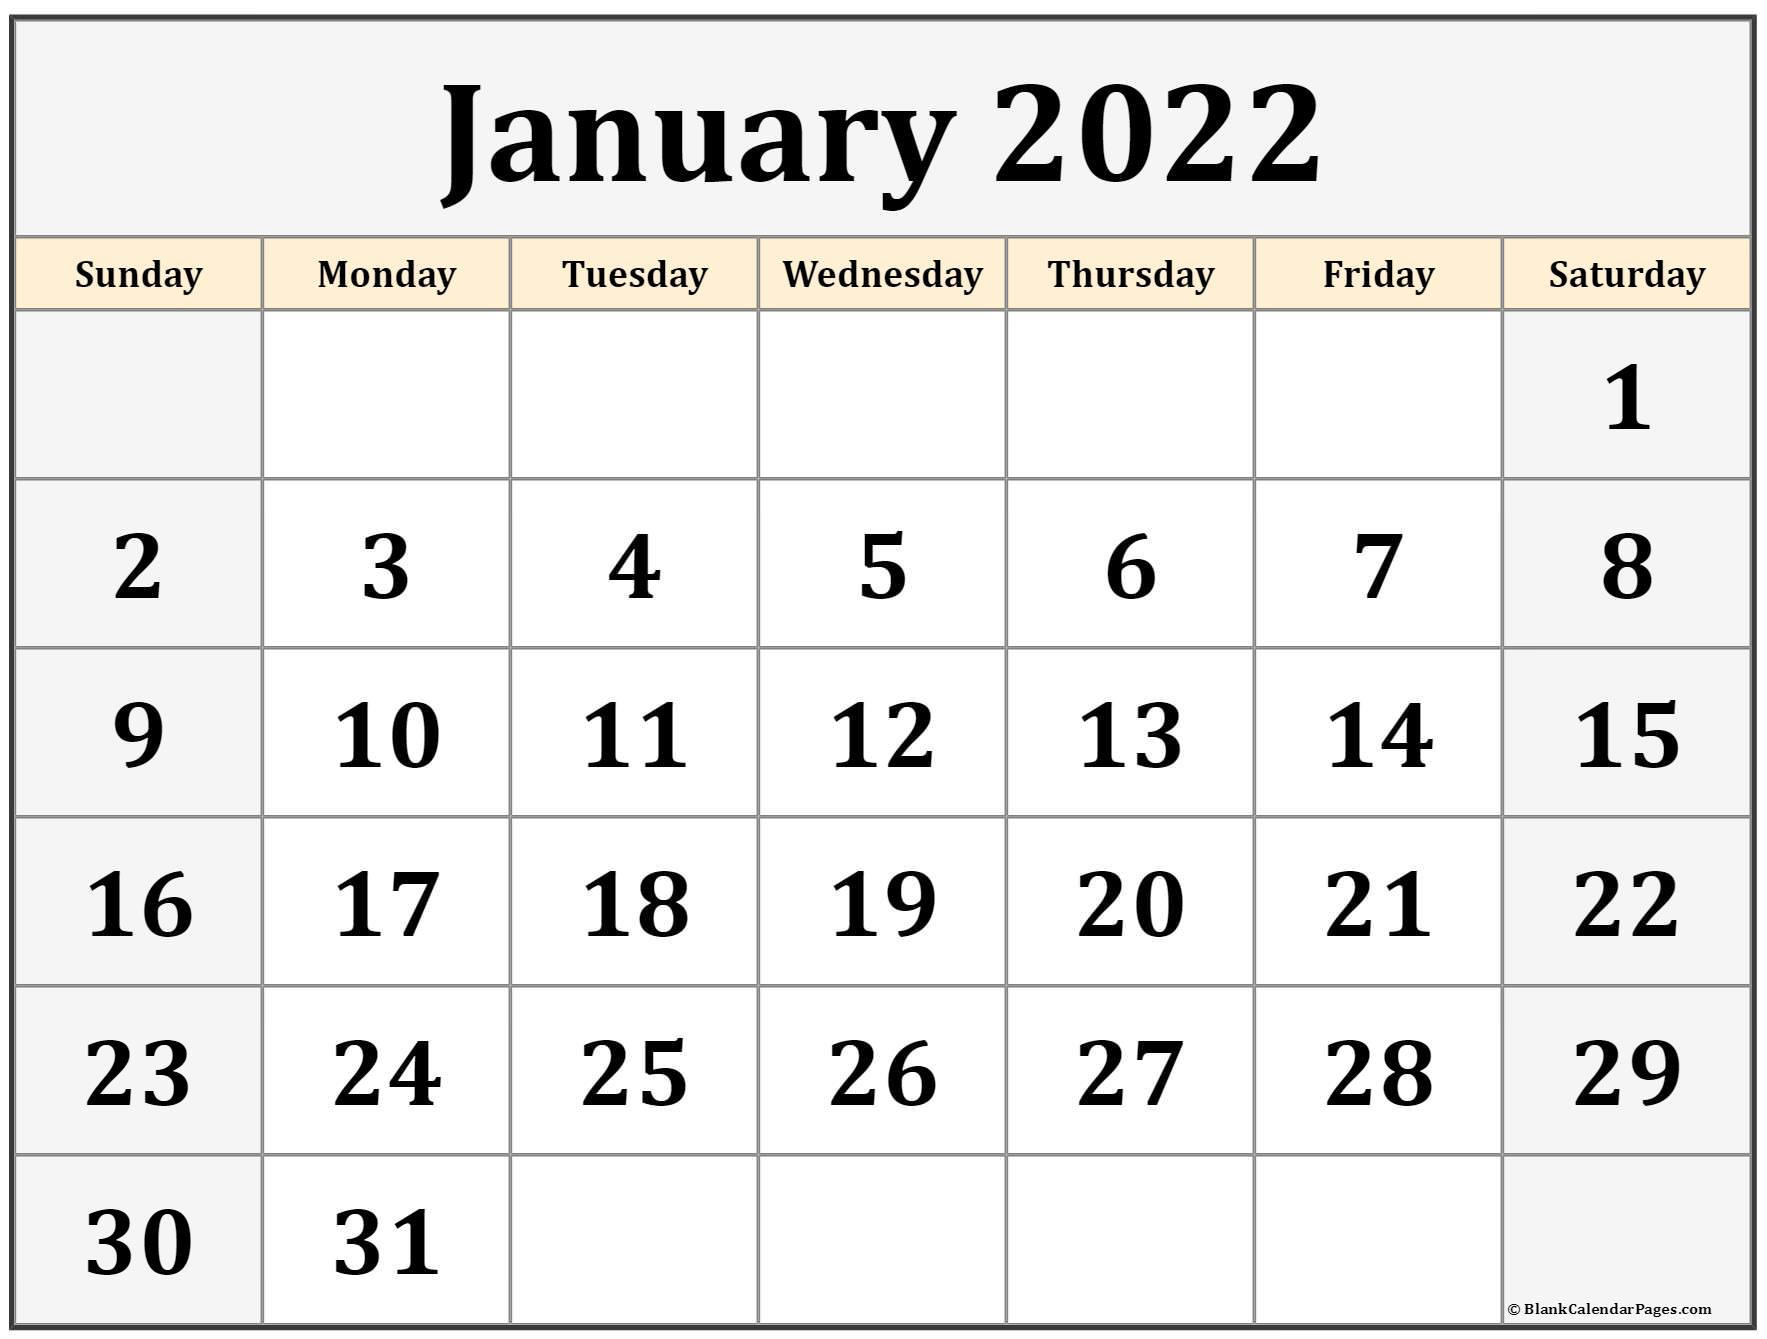 Catch January 2022 Calendar Amavasya